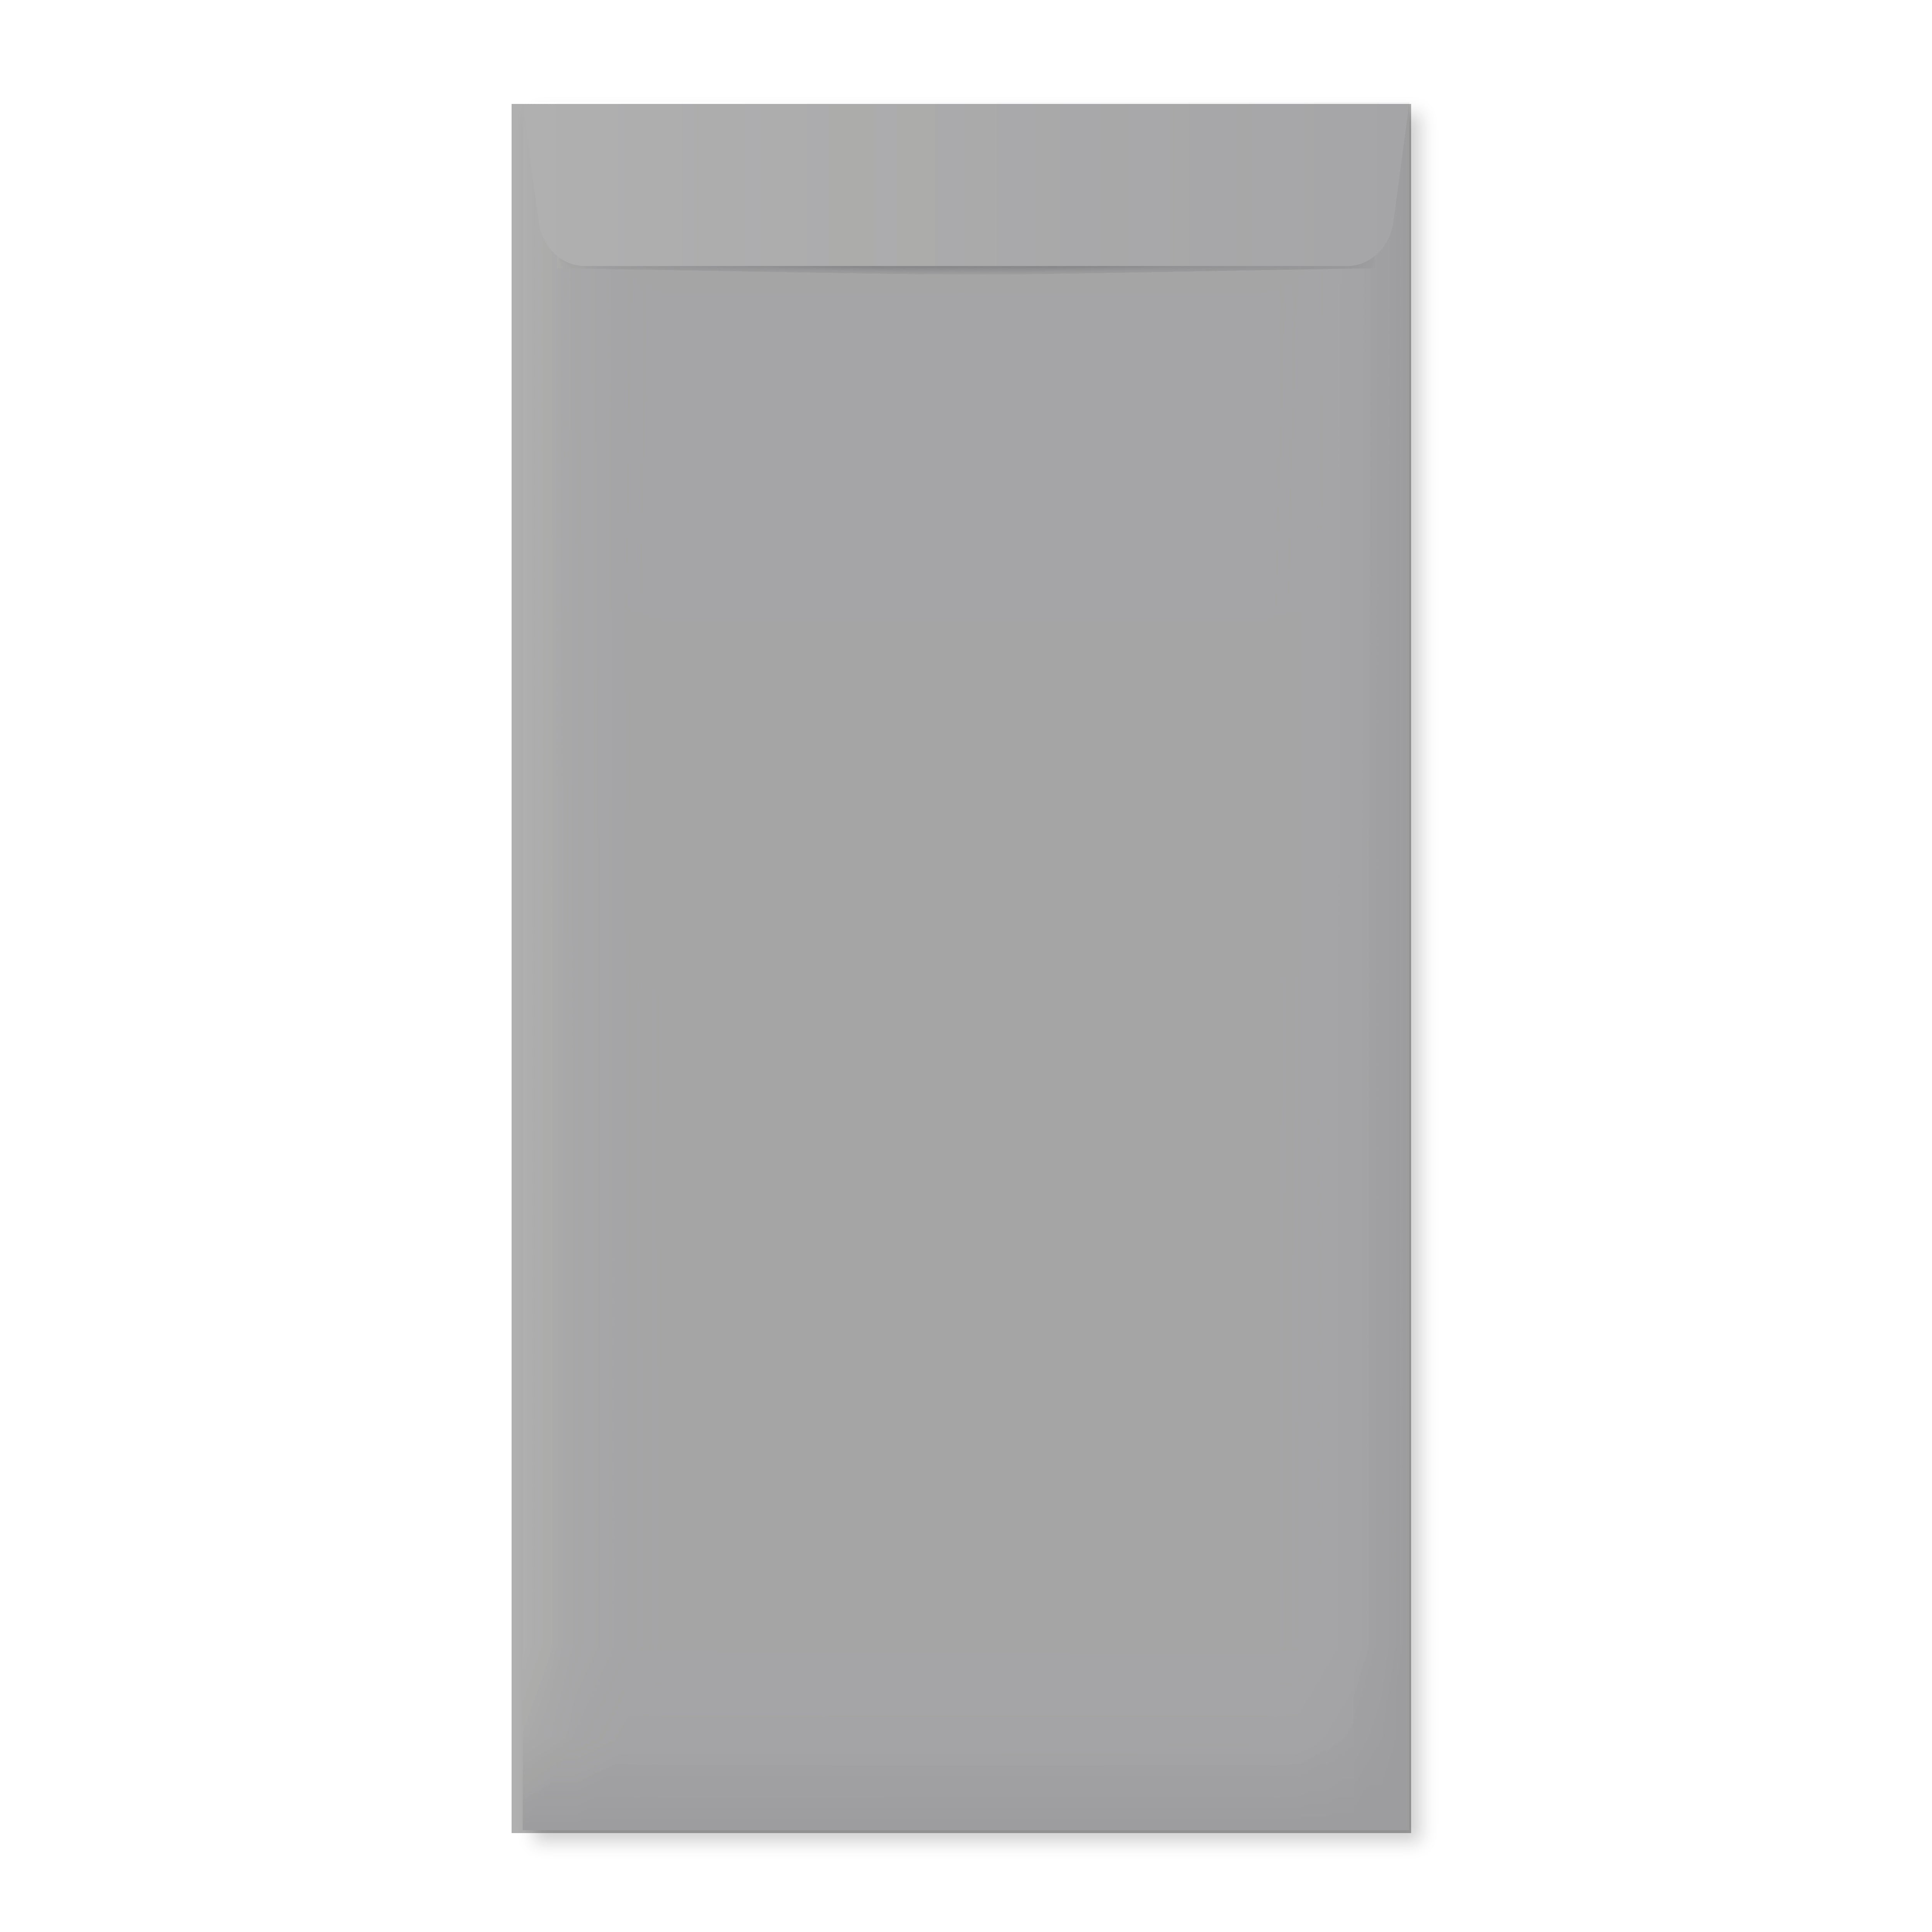 Kenzone Envelopes 180g 110x220mm 20s 13 Grey Default Title